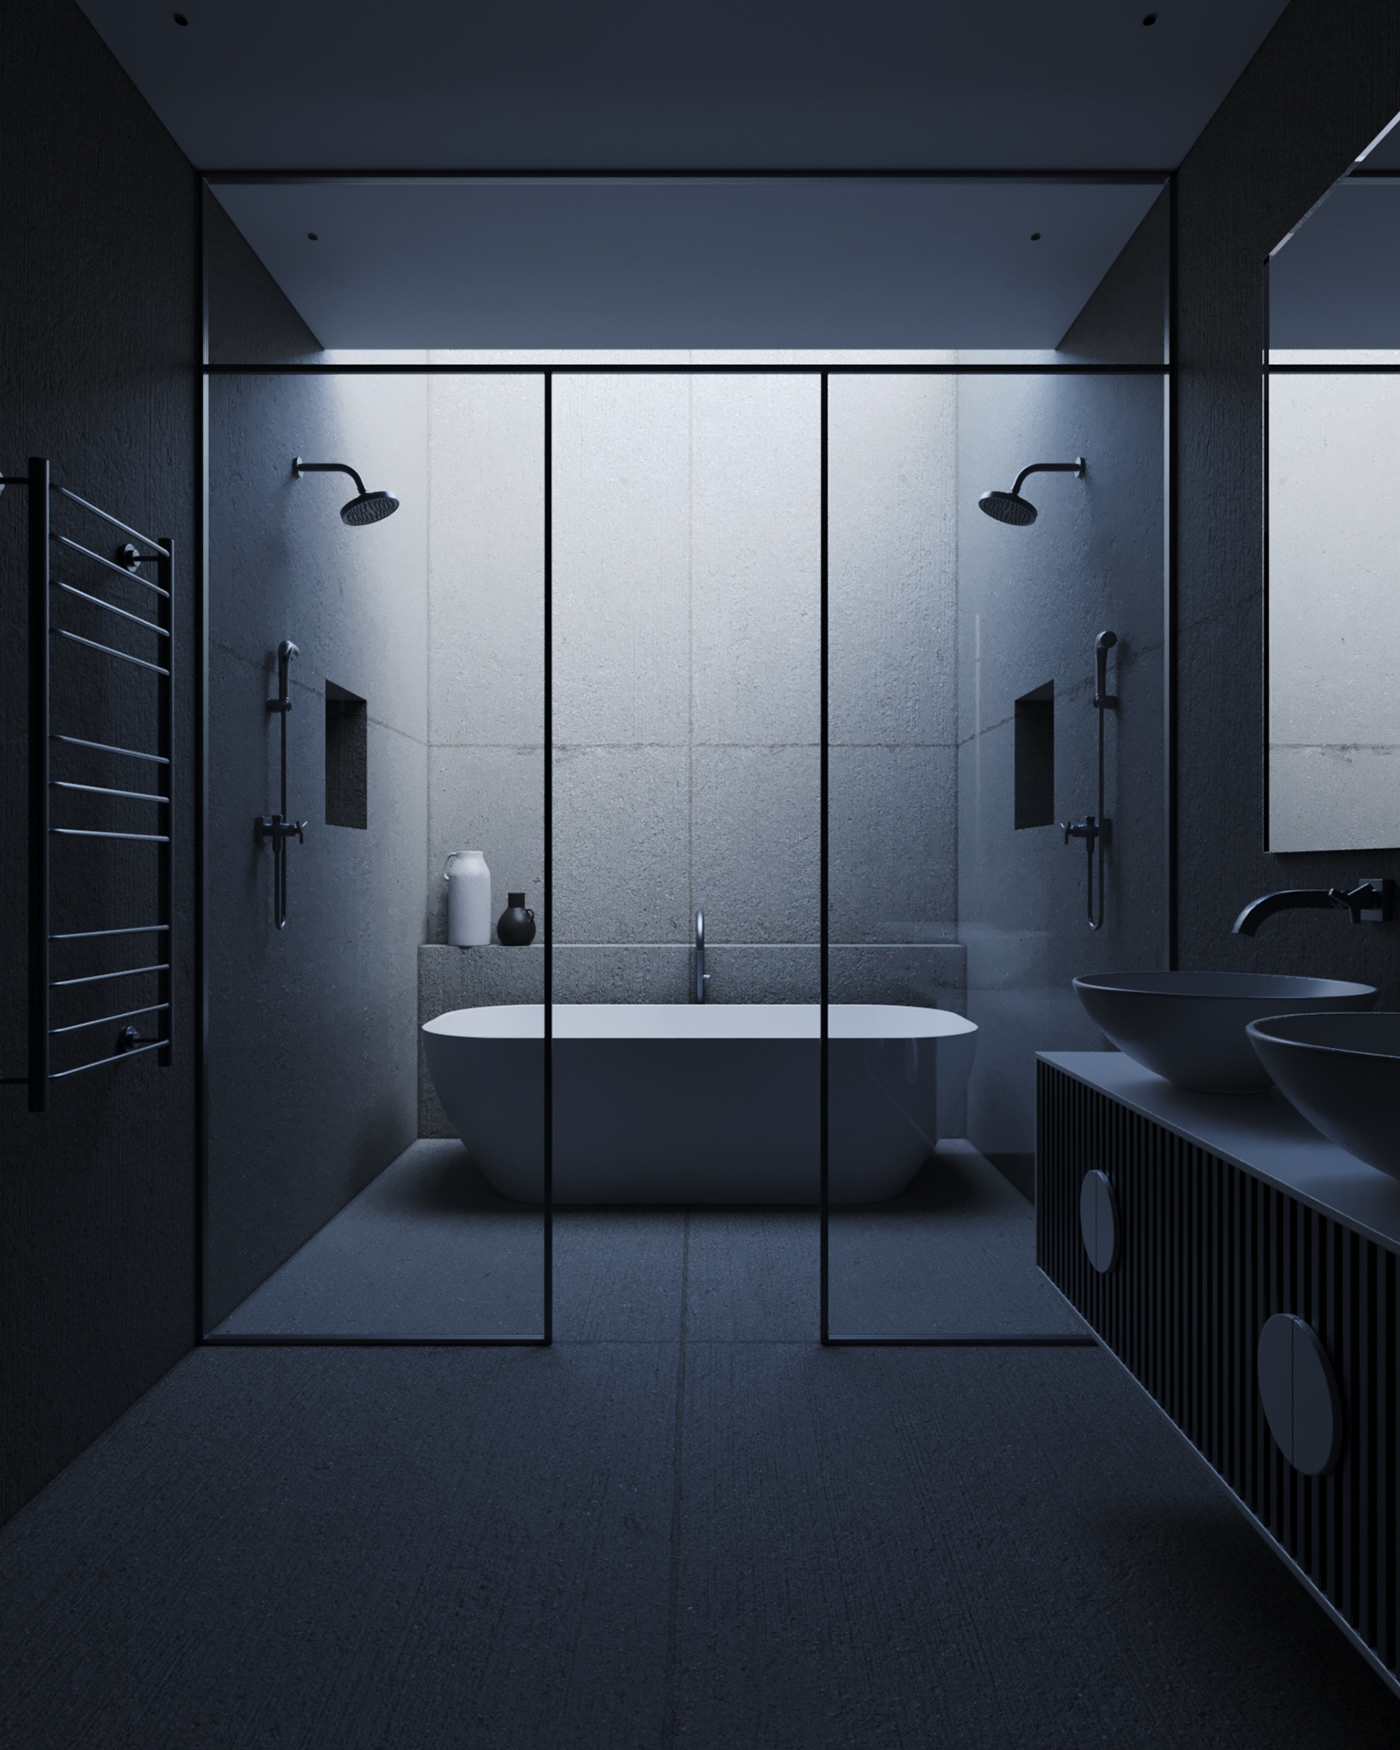 Sink bathtub glass SHOWER bathroom corona Render archviz CGI metal